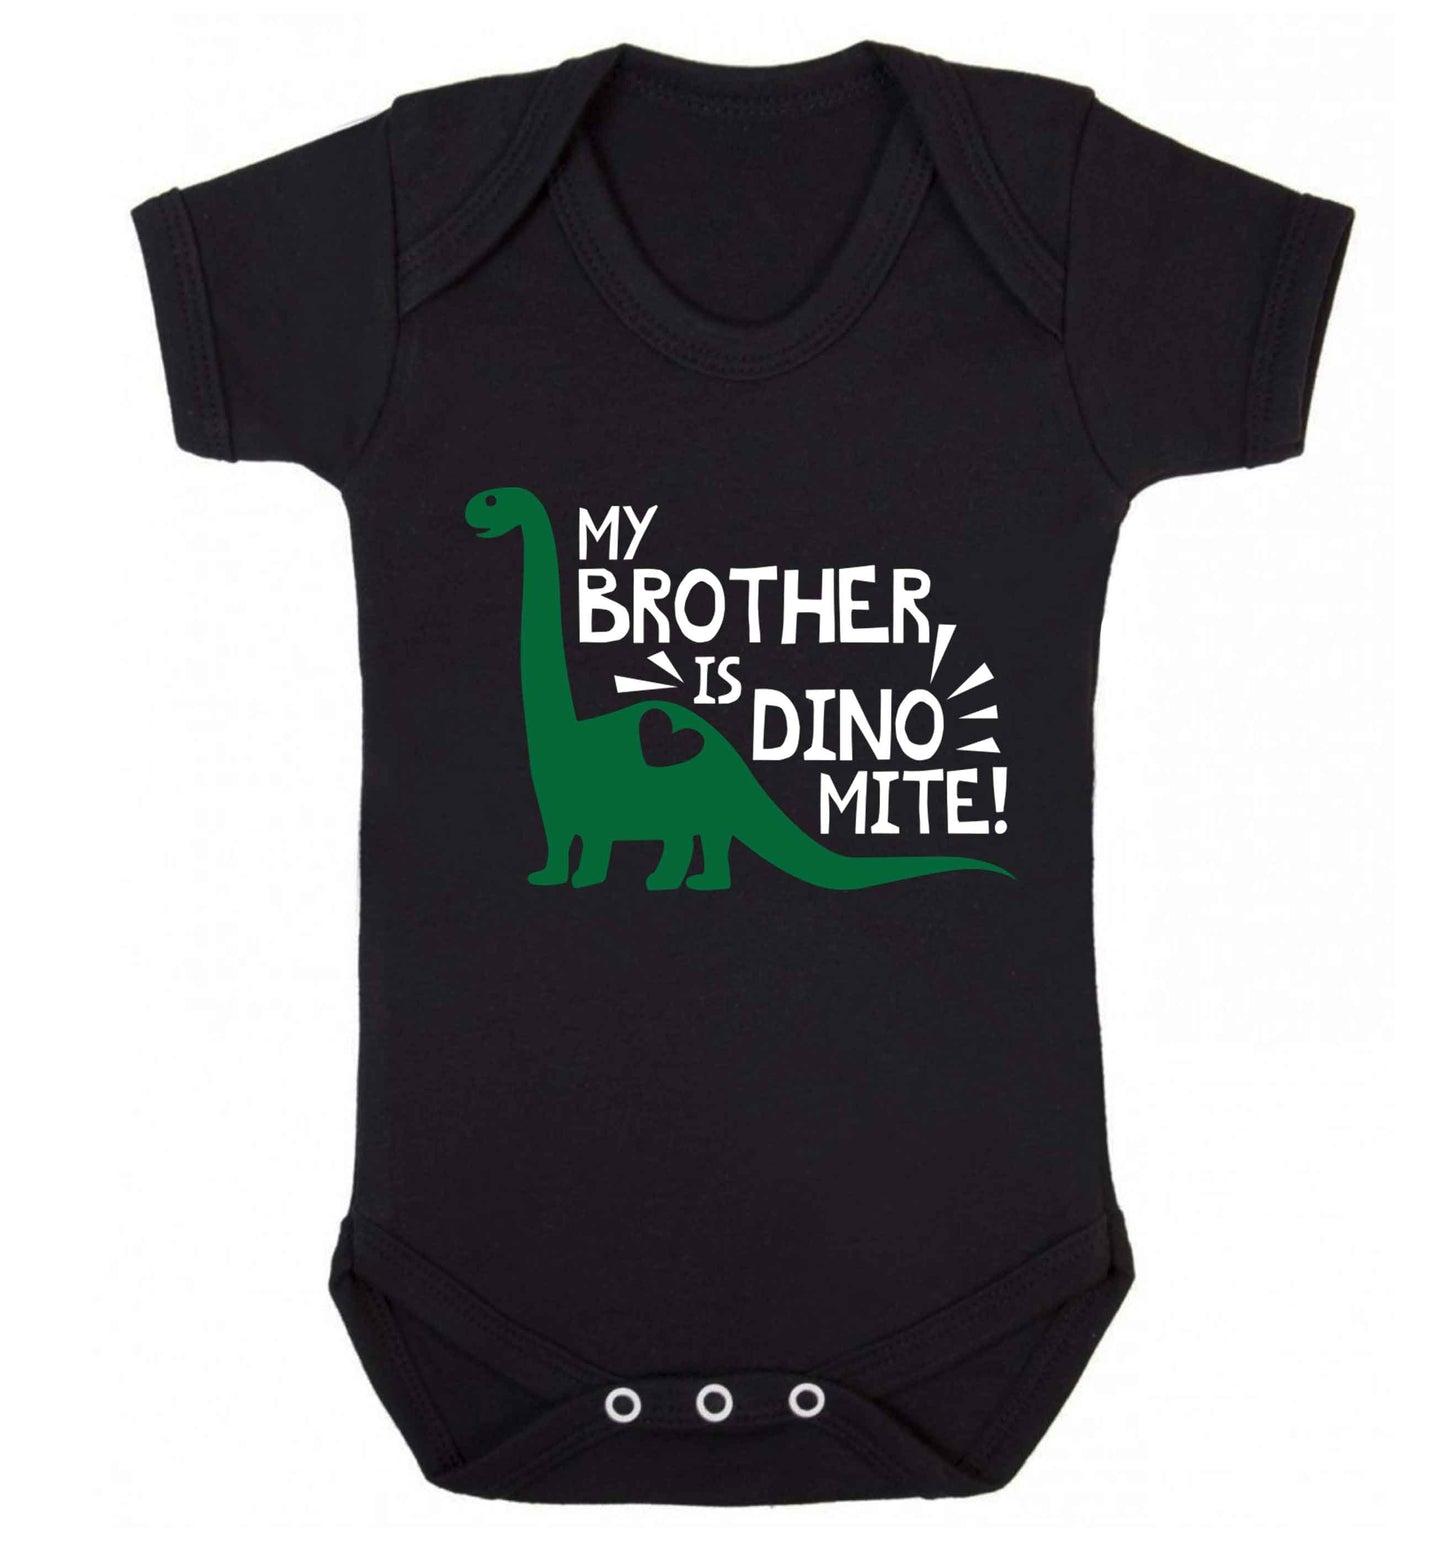 My brother is dinomite! Baby Vest black 18-24 months